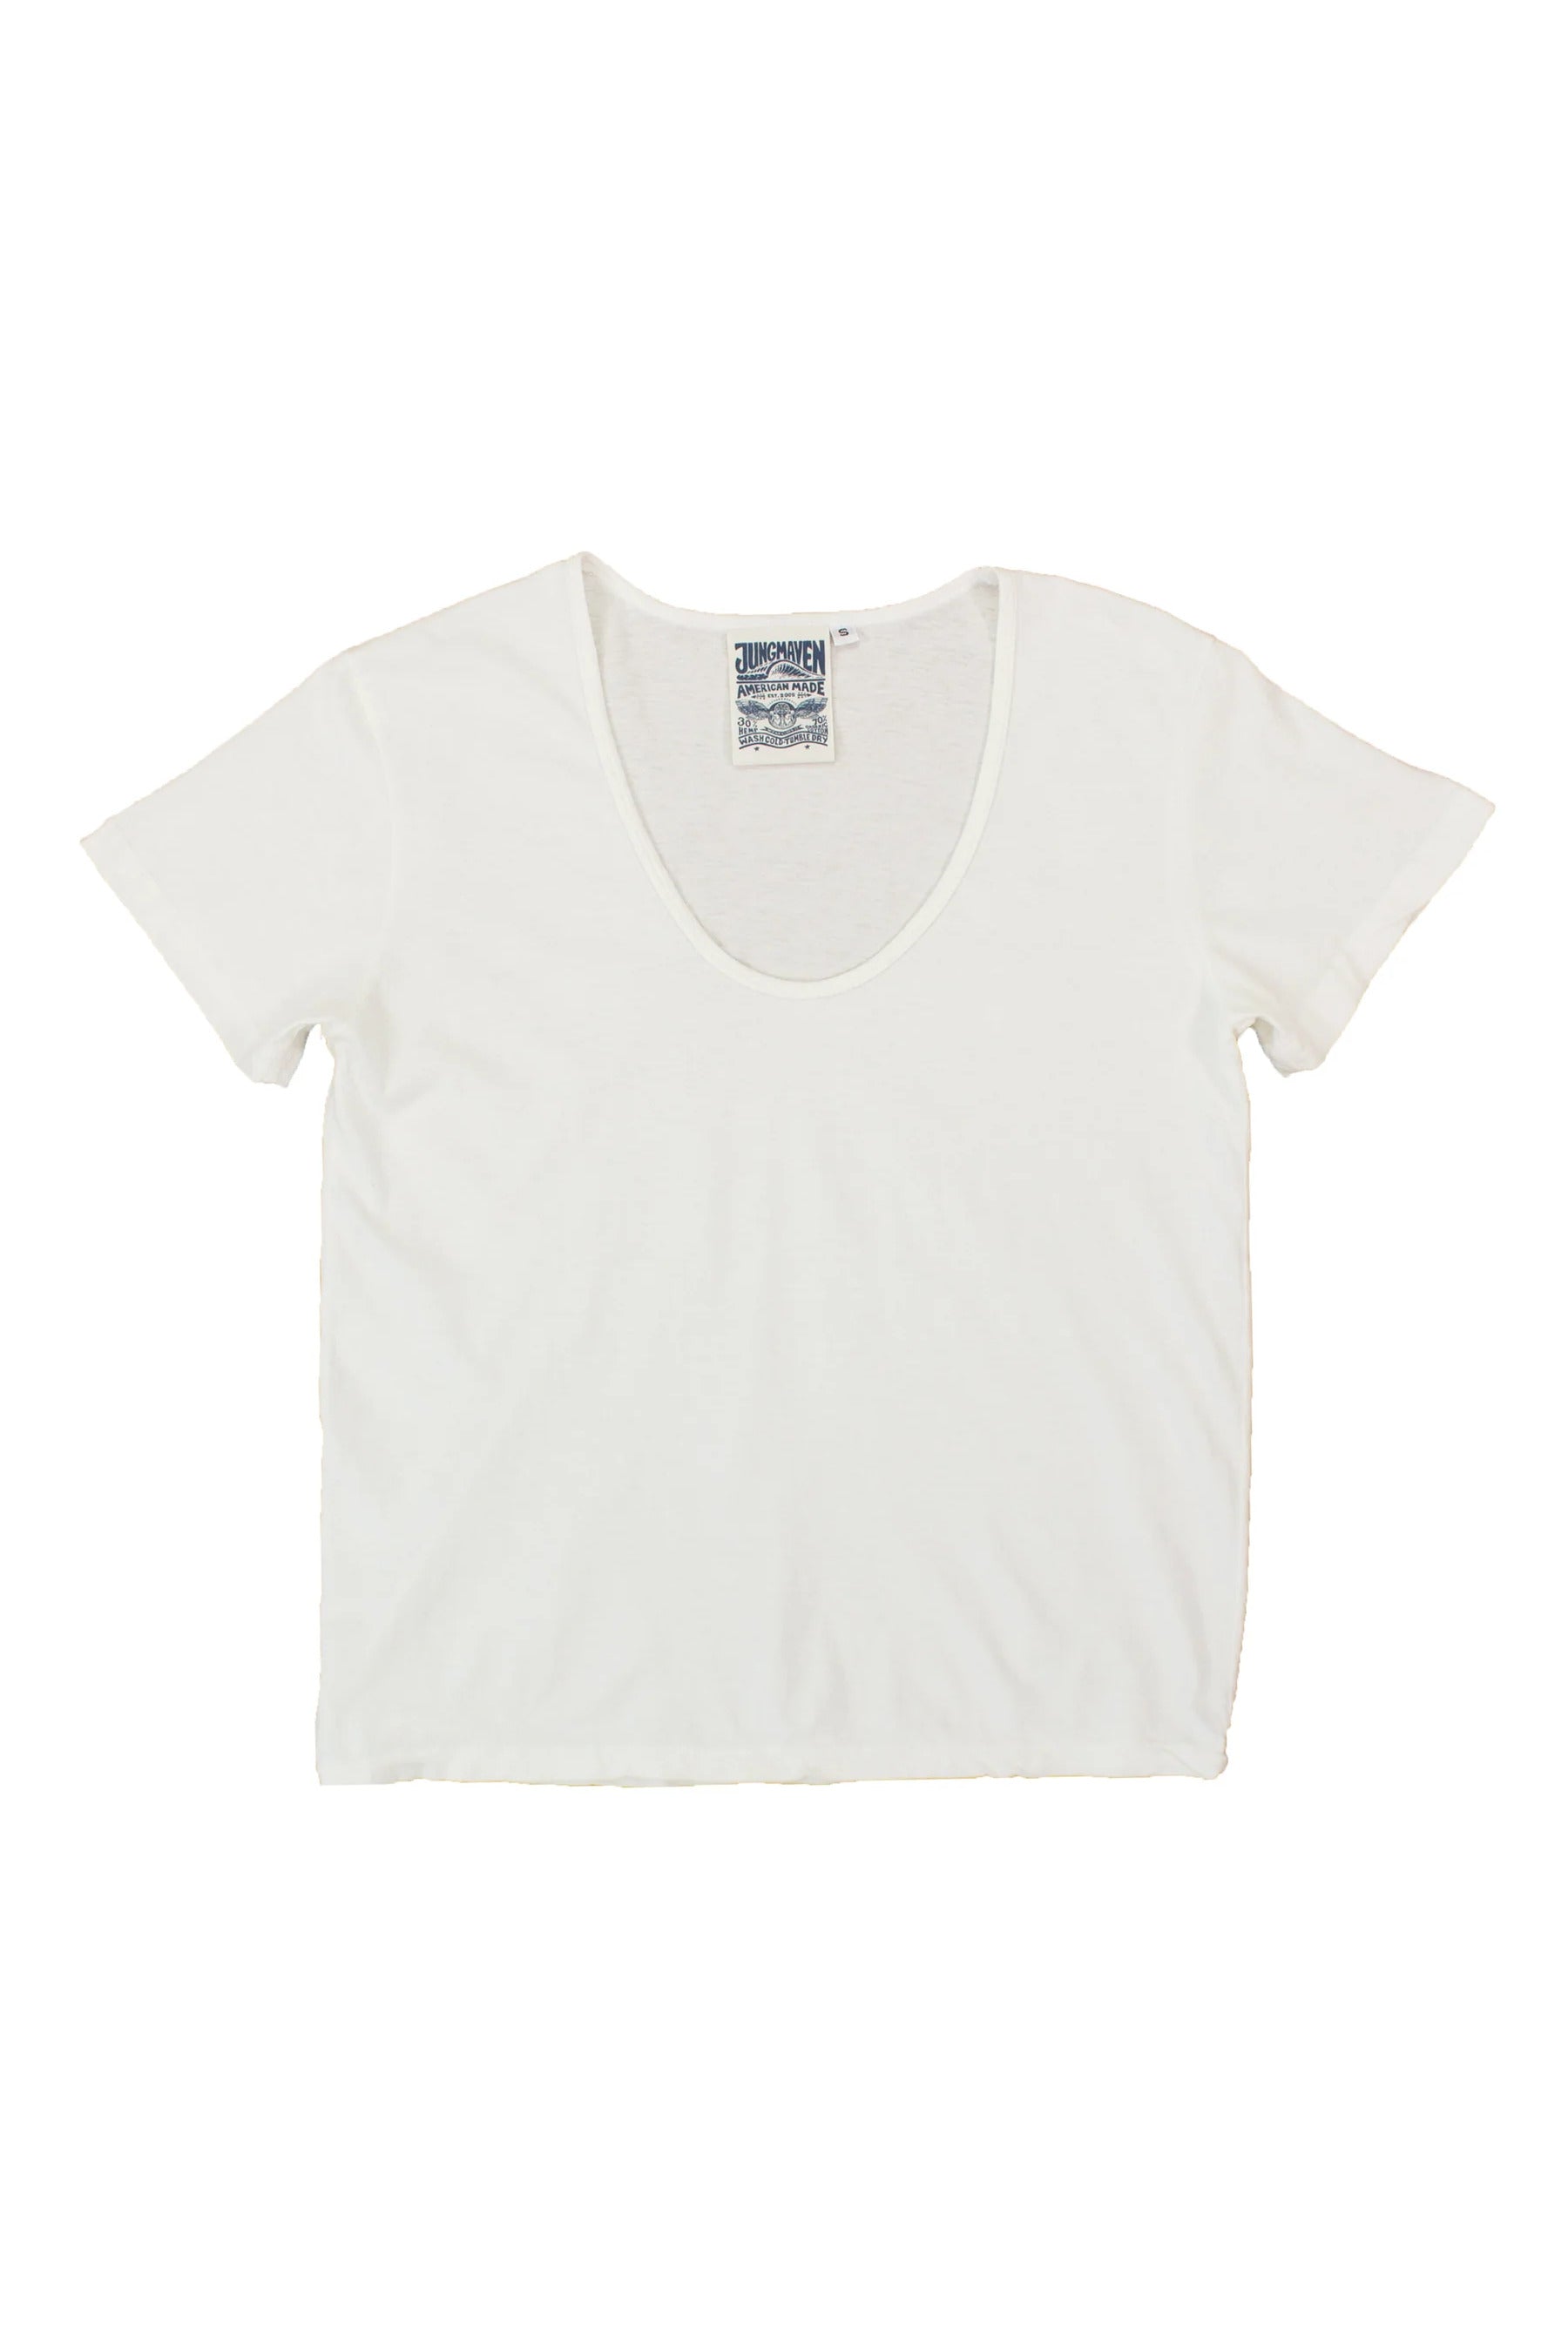 JUNGMAVEN - Sustainable Hemp Clothing - Made in USA - Women's Zuma Scoop Neck Tee - Organic Cotton Hemp Jersey - Washed White - Basic T-Shirts